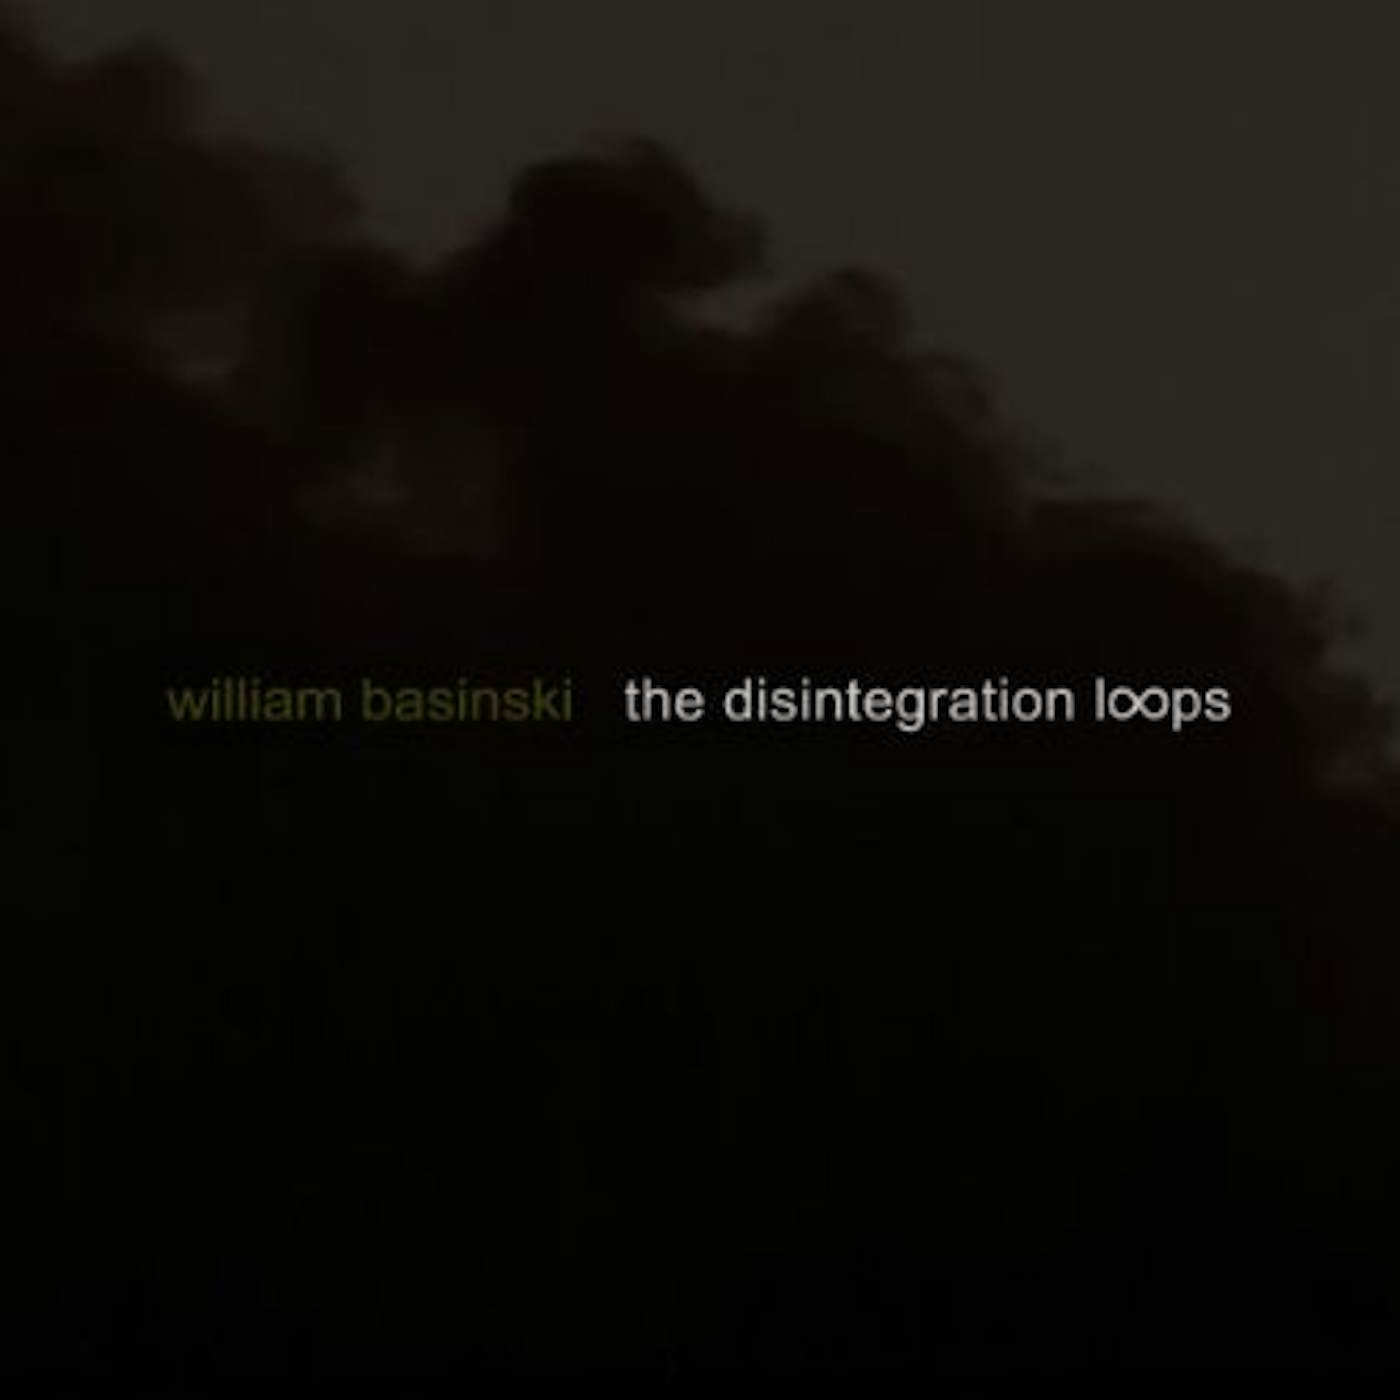 William Basinski DISINTEGRATION LOOPS CD